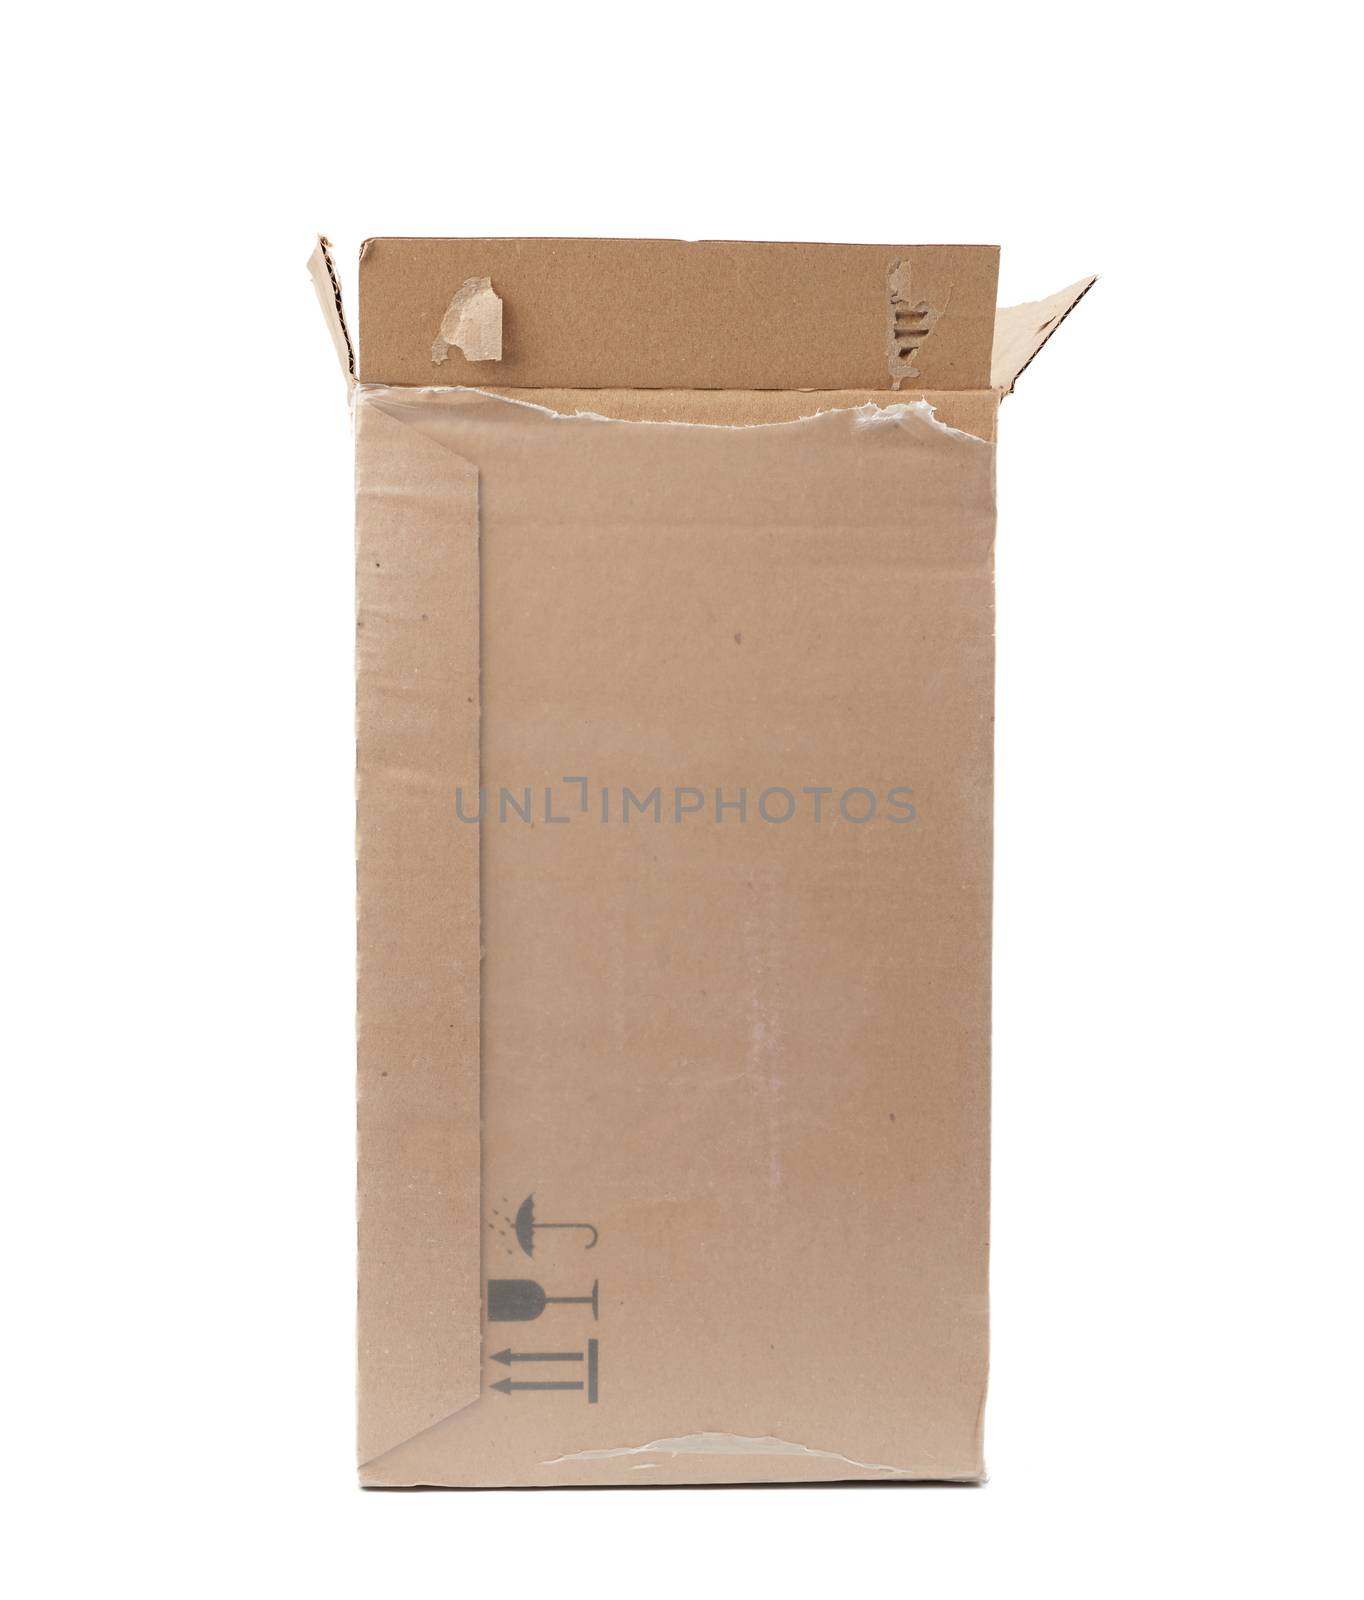 rectangular box wrapped in transparent polyethylene by ndanko